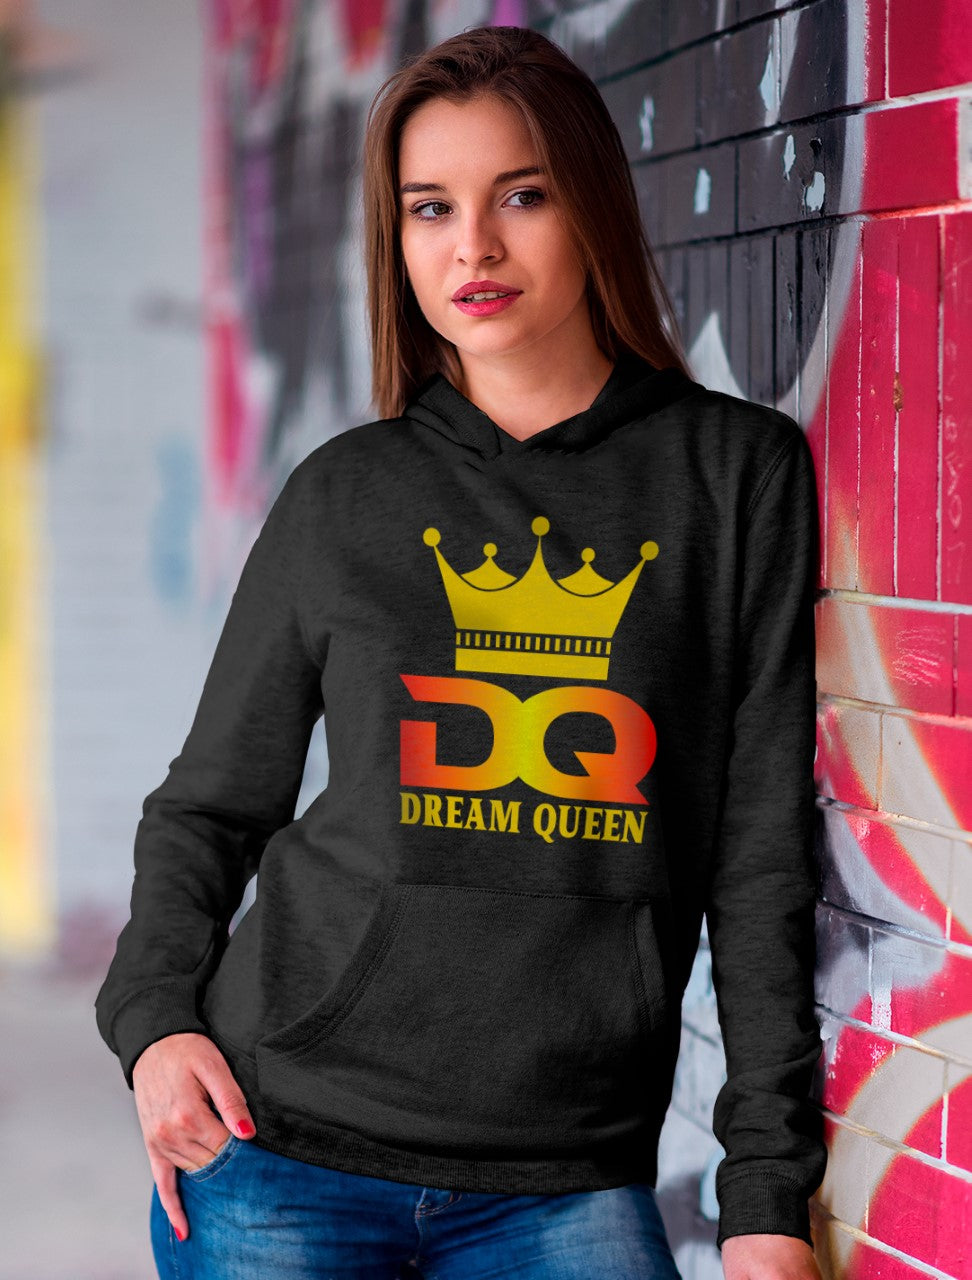 Dream Queen - Women - Happy Fashion Time Store